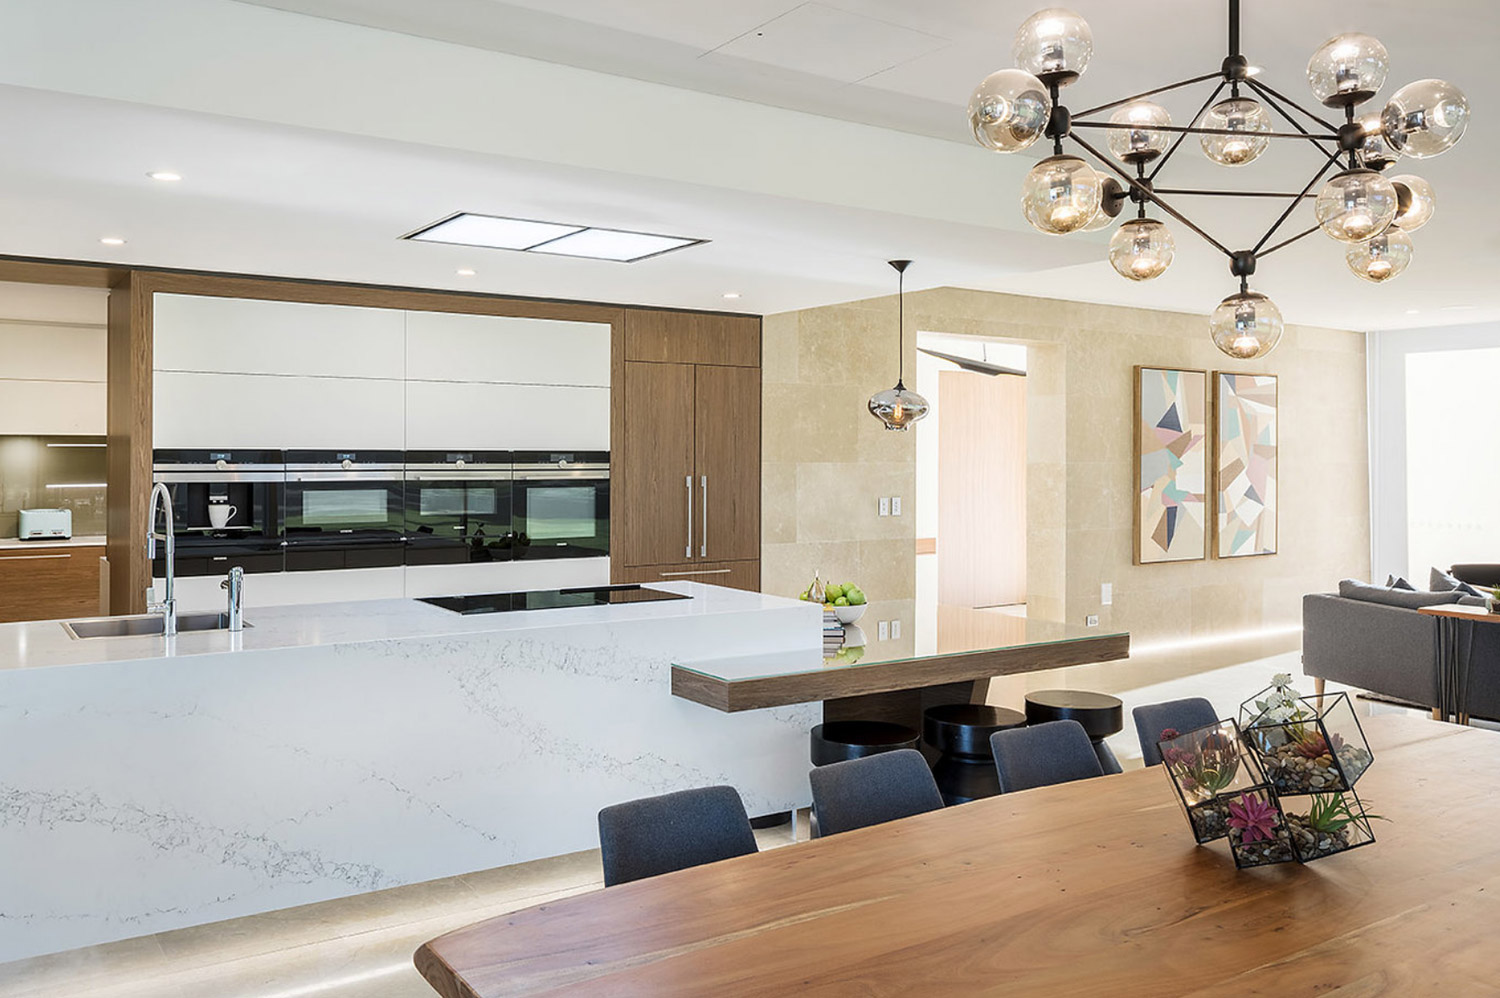 Champion Lakes kitchen designed by Studio Seventy Four